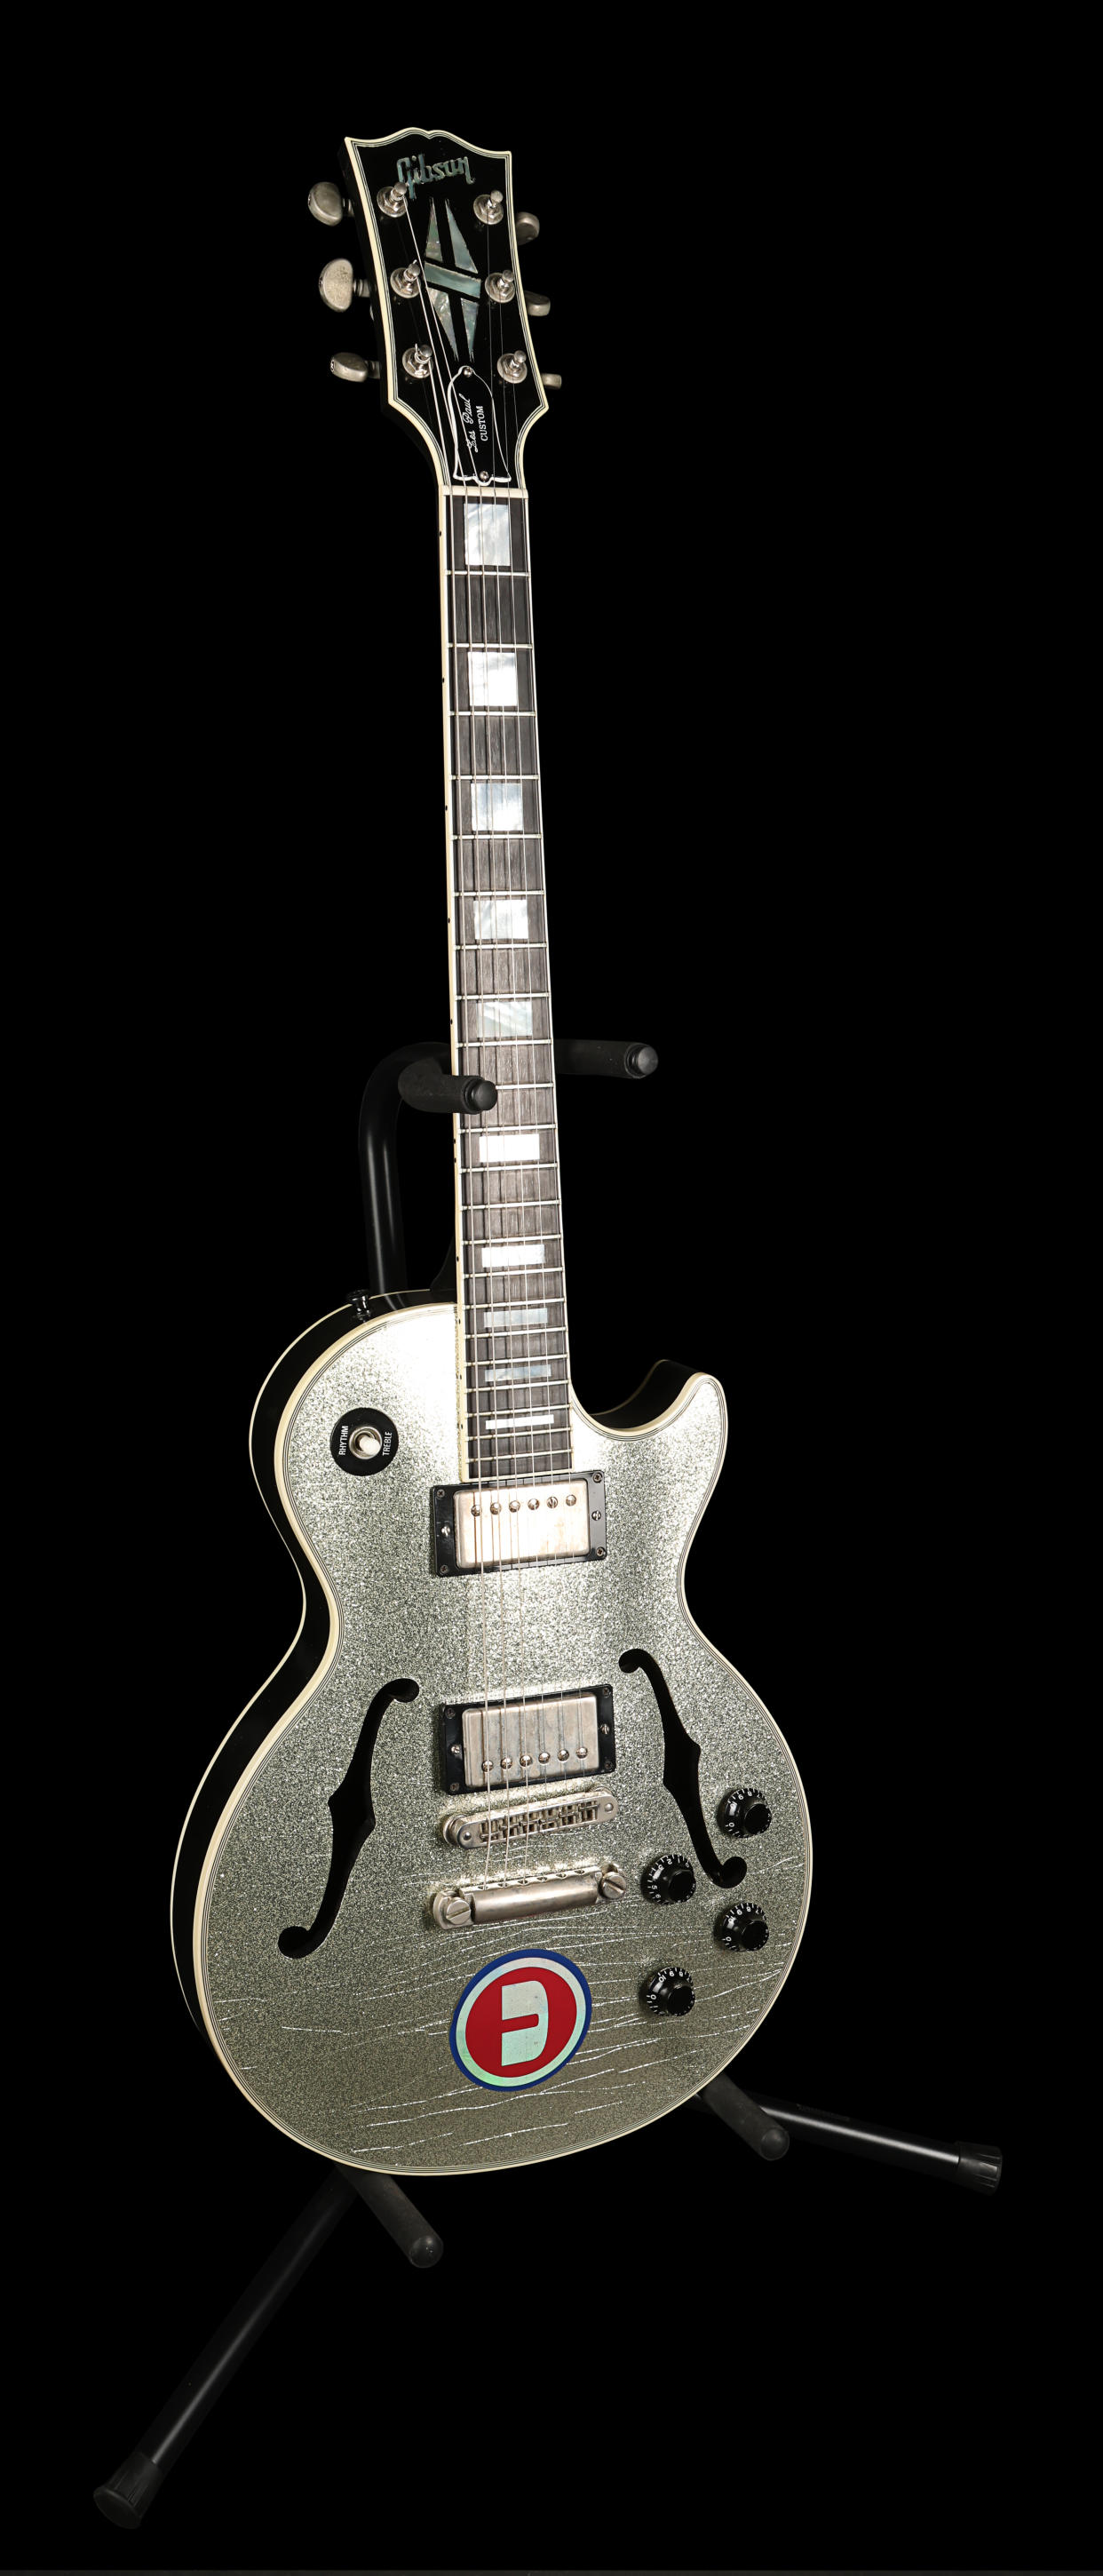 Noel Gallagher’s custom silver sparkle Gibson Les Paul Florentine guitar (Propstore/PA)